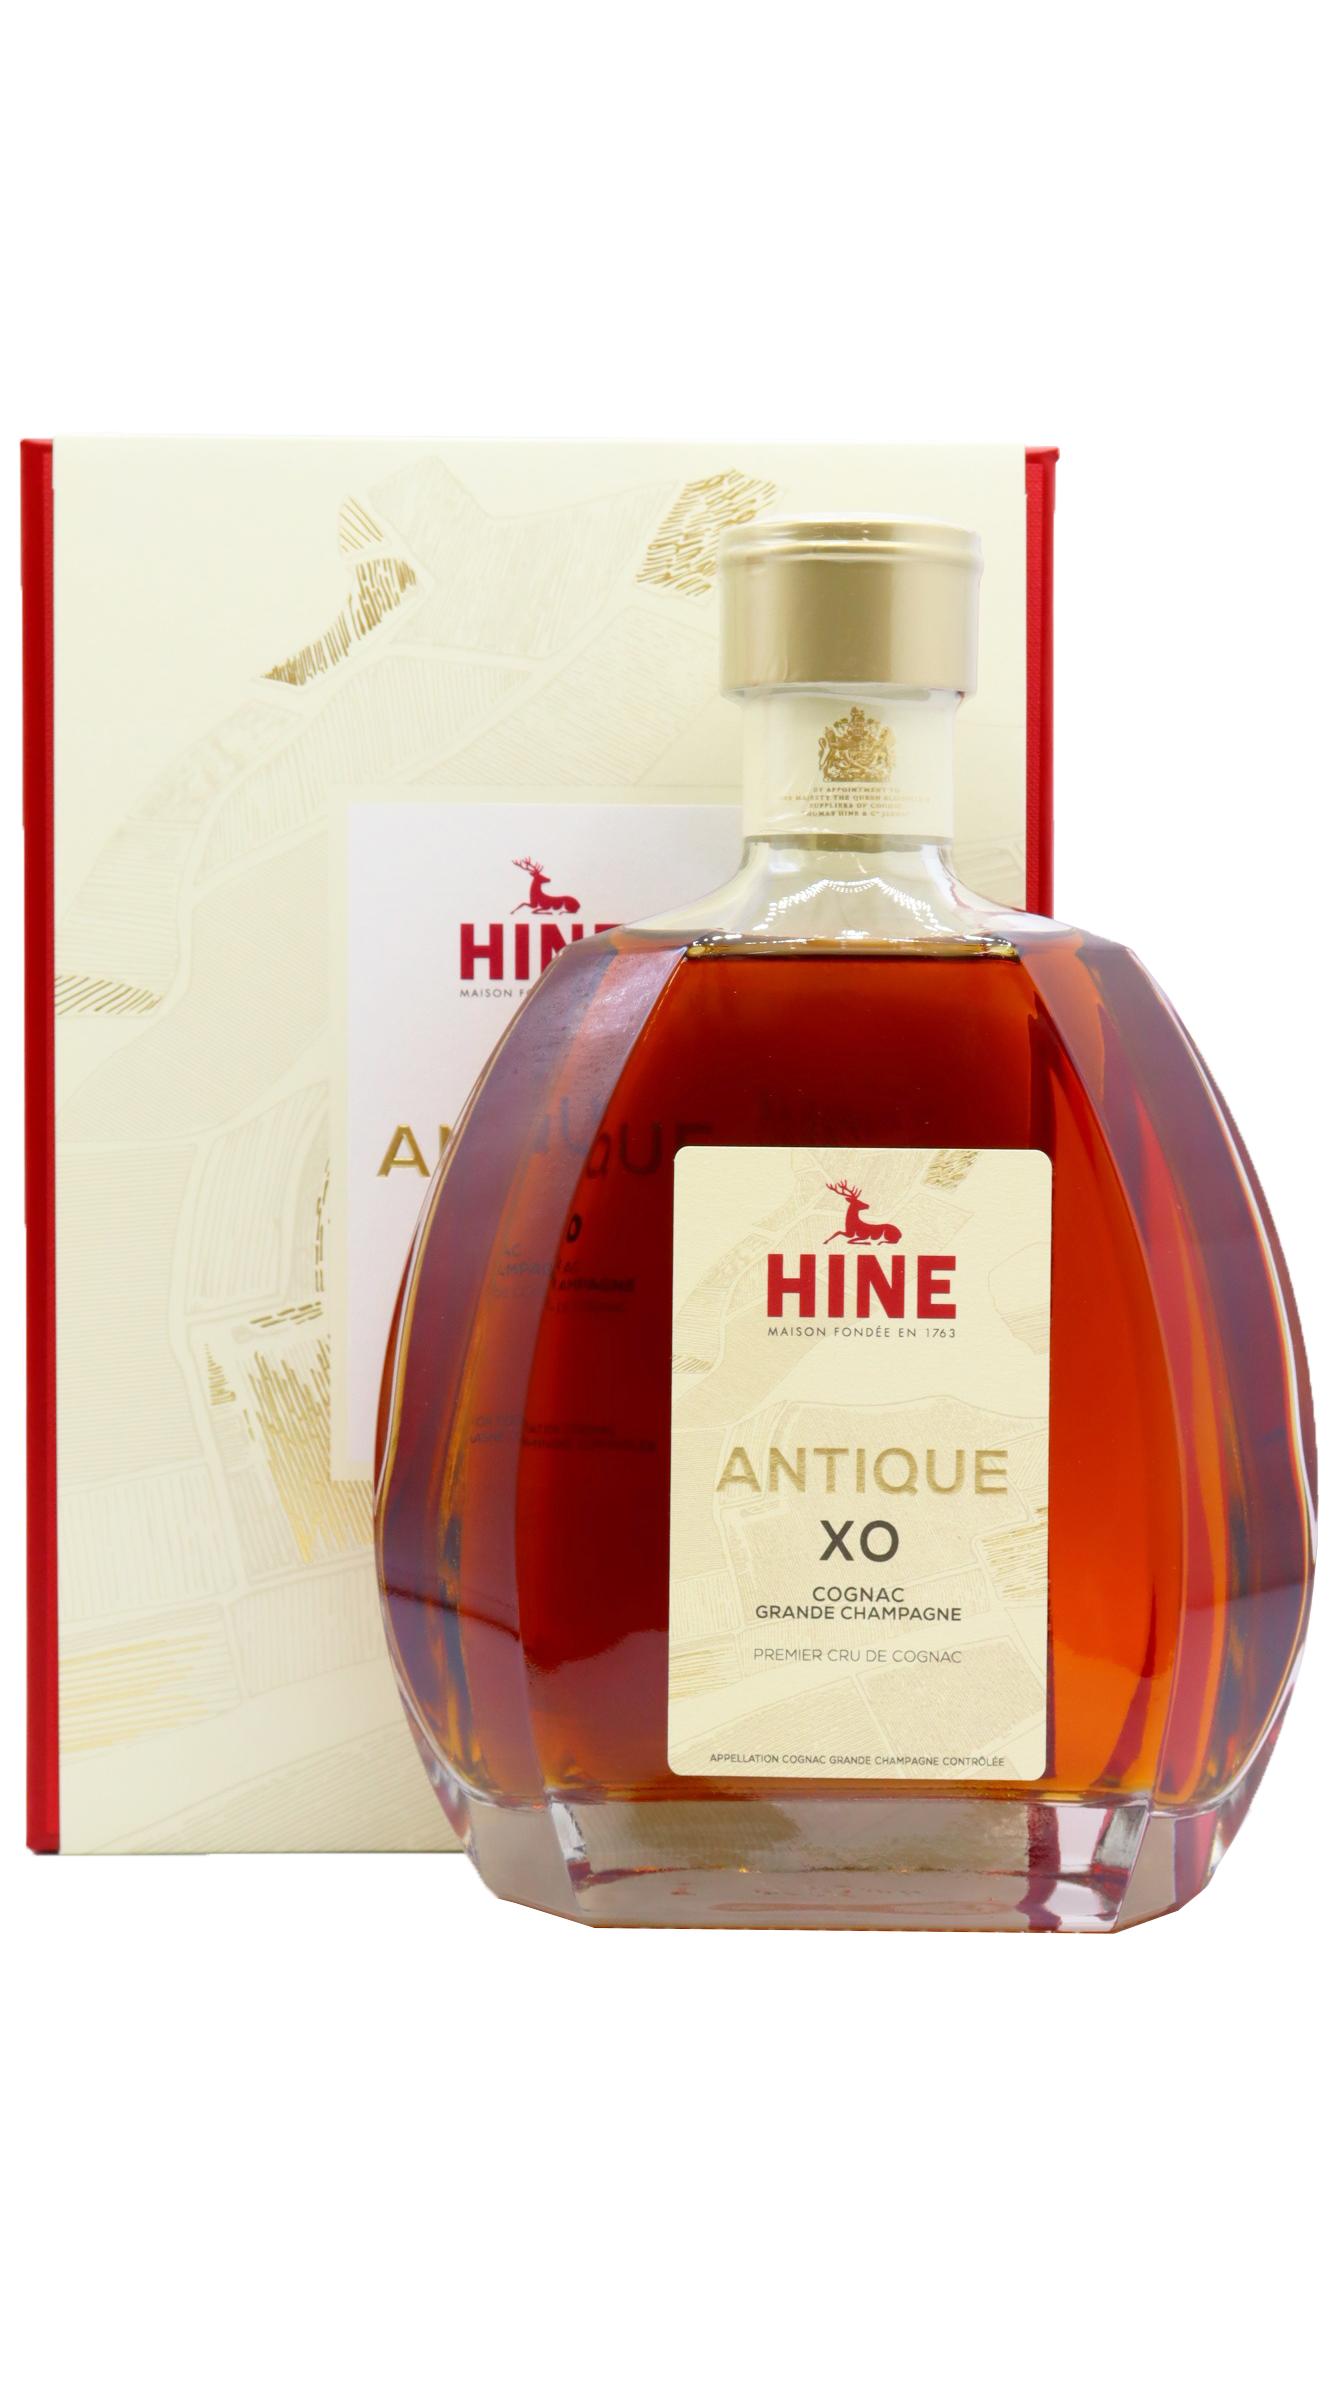 Hine - Antique XO Cognac 70CL